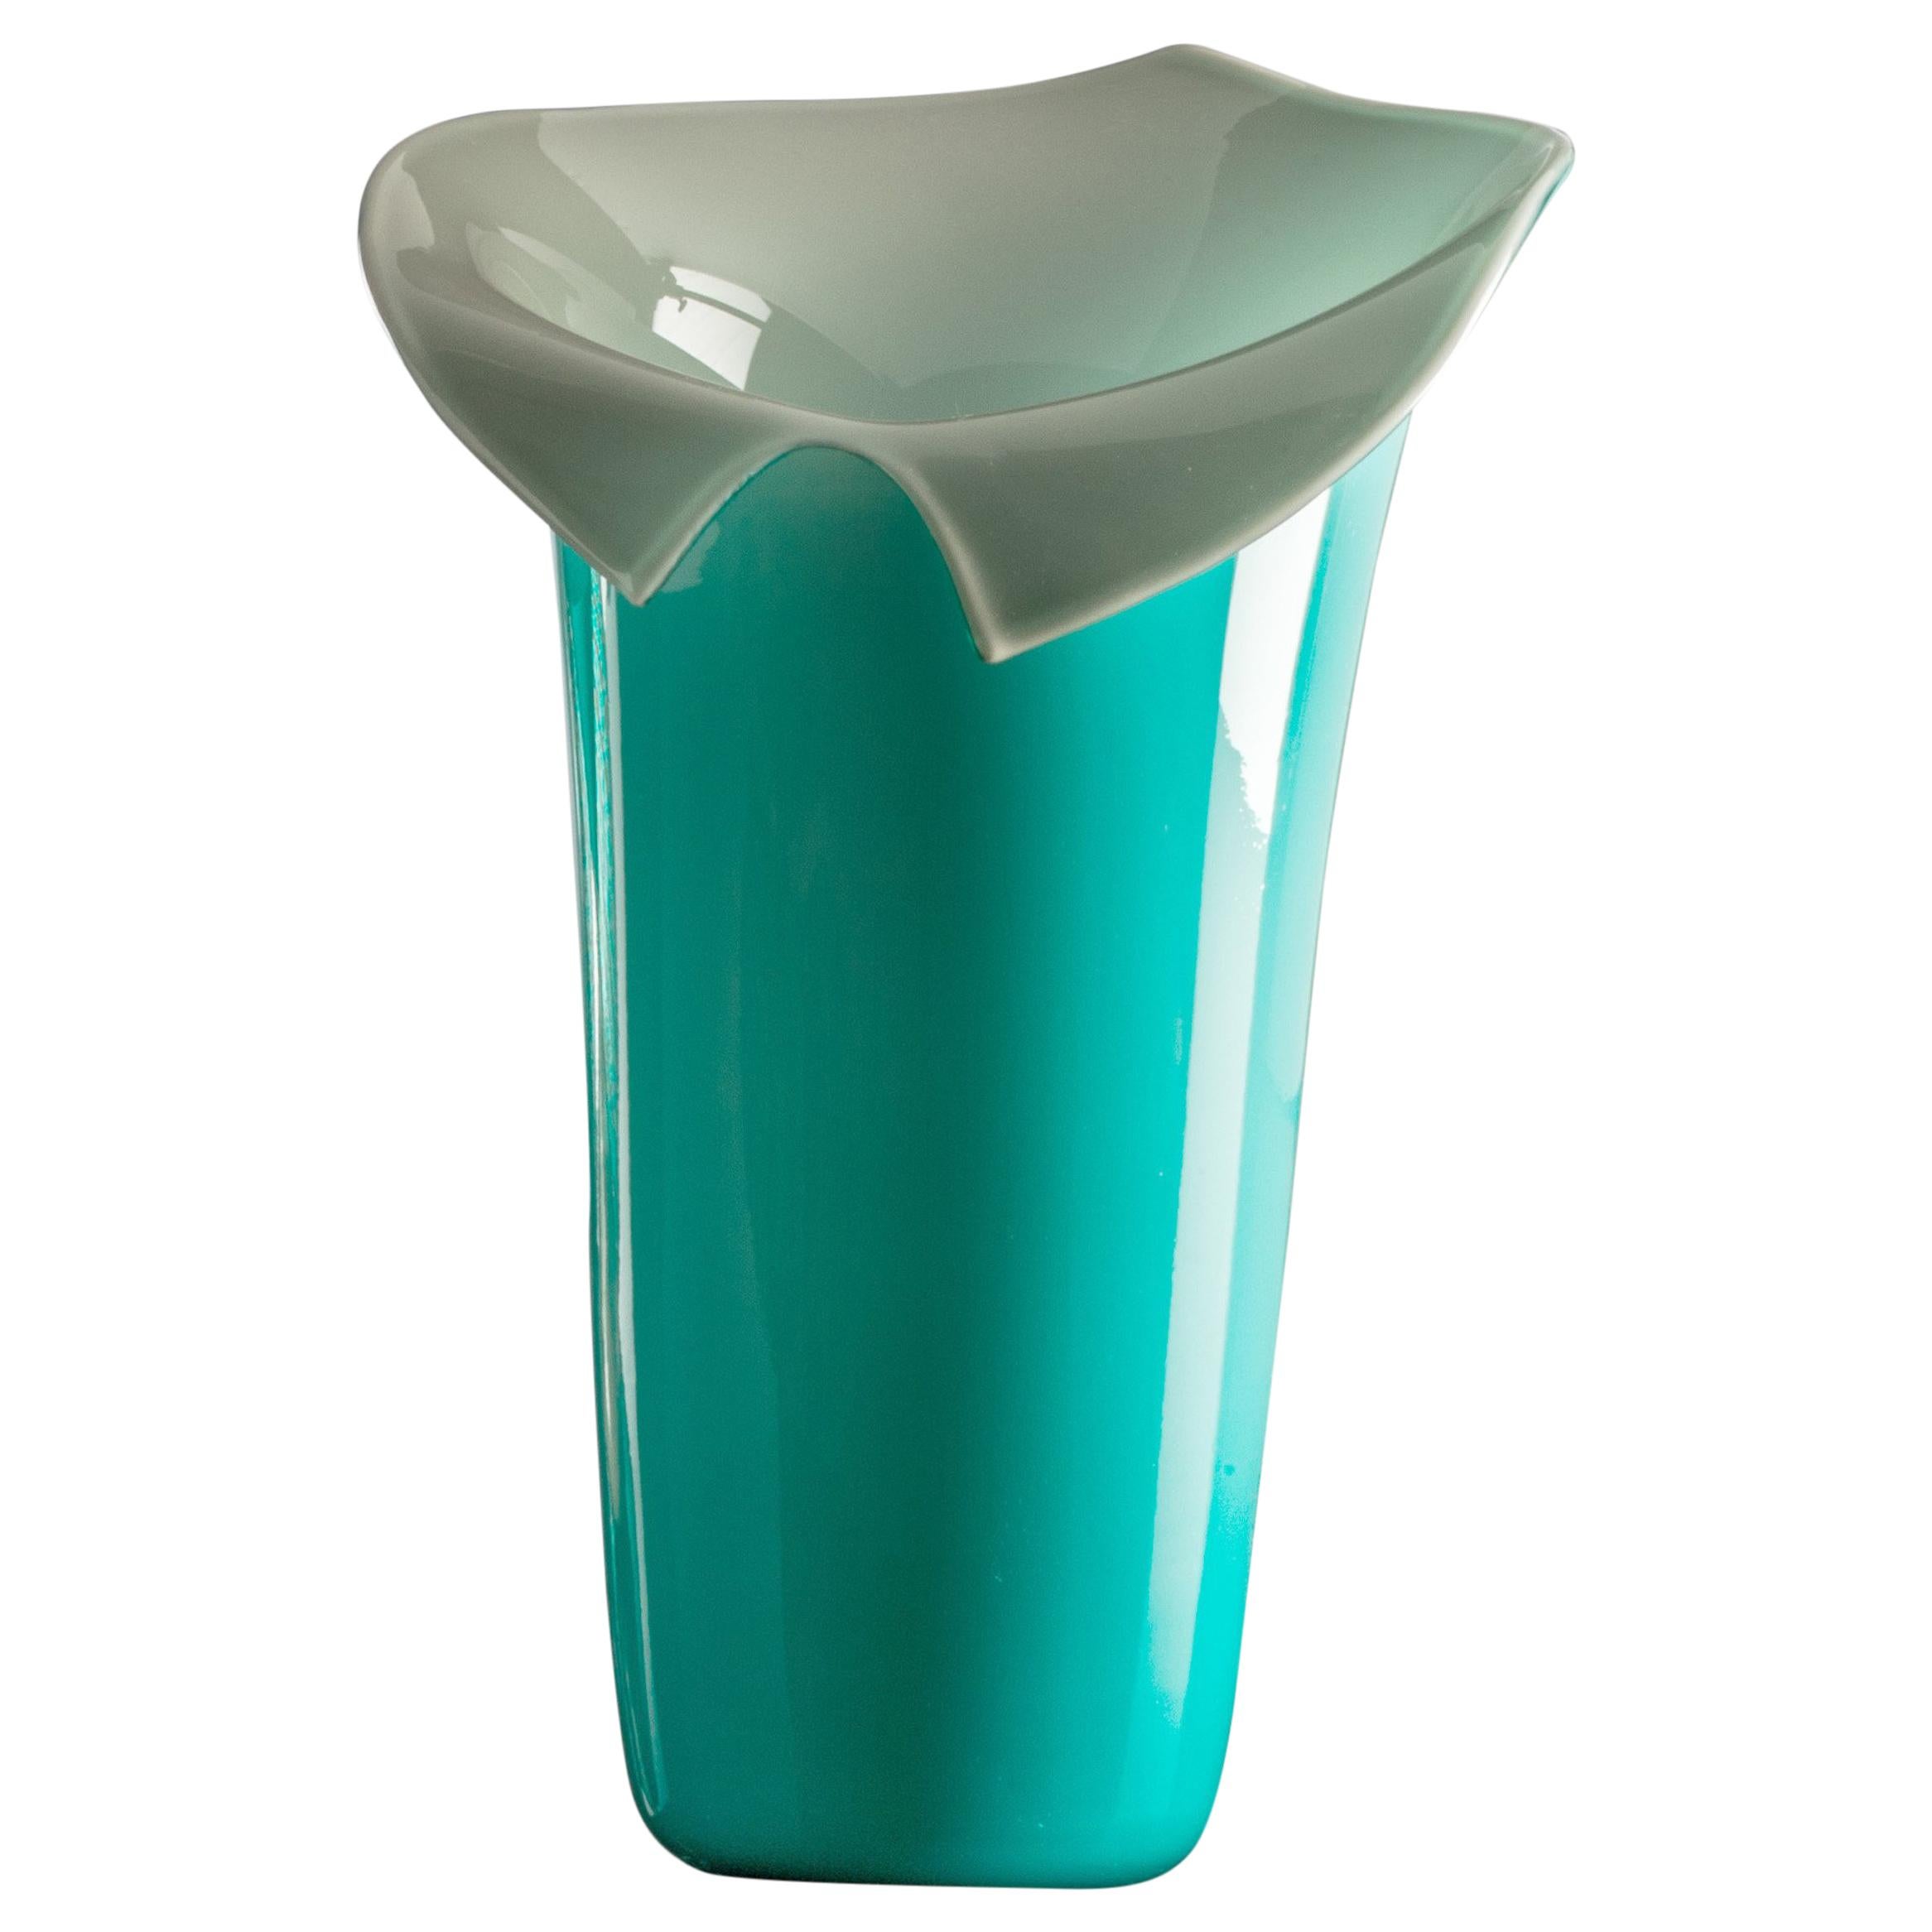 Venini Calla Limited Edition Glass Vase in Mint Green and Gray